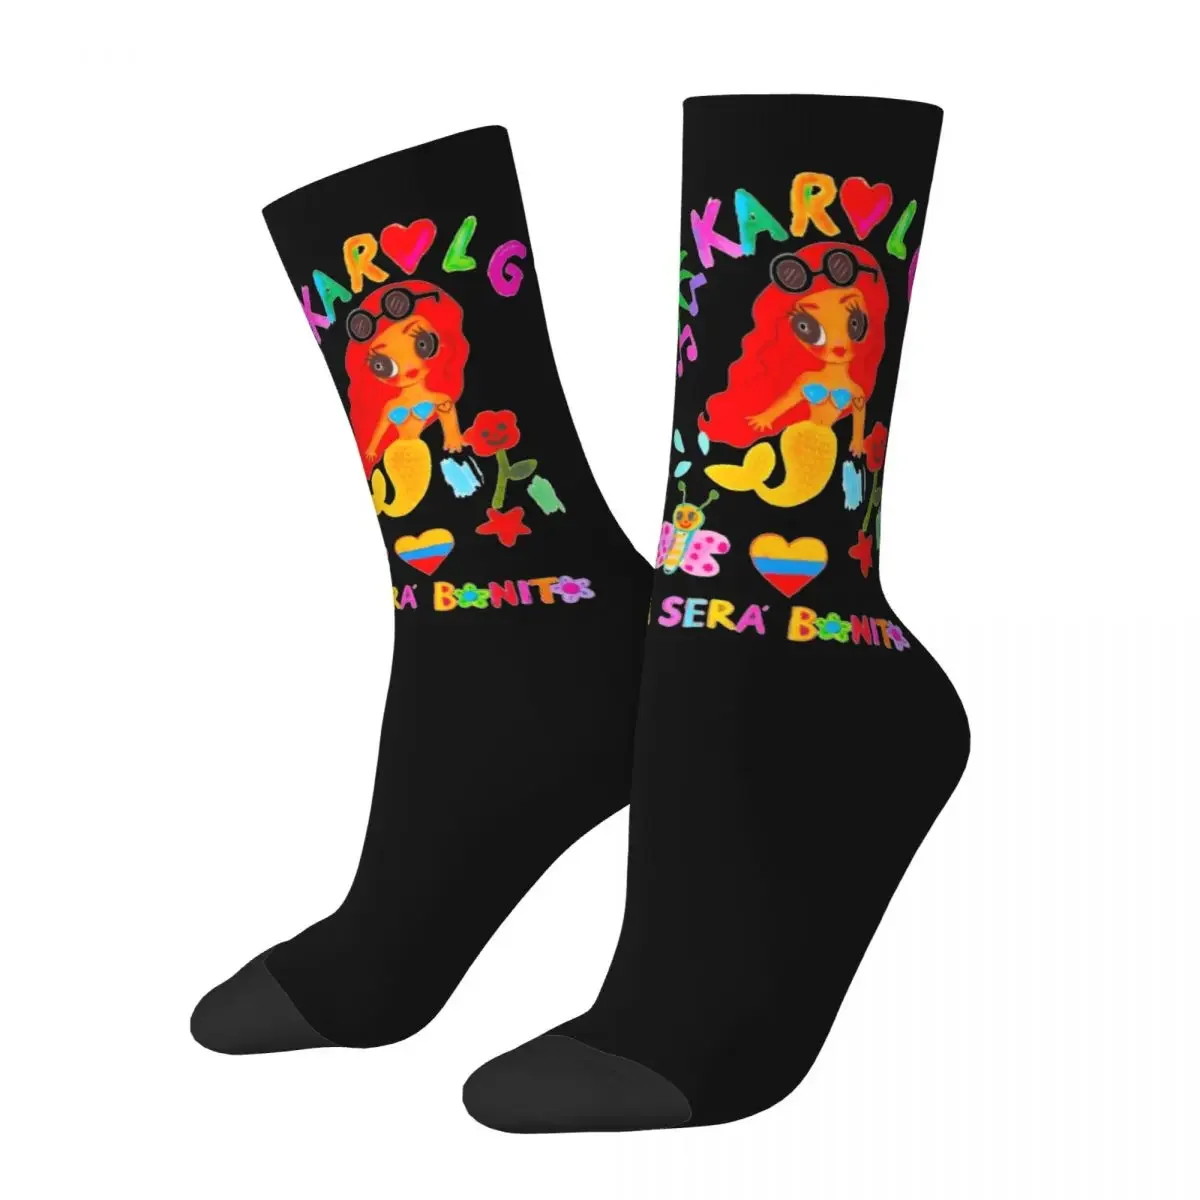 

Manana Sera Bonito Karol G Socks Men Women Funny Happy Music Socks Crazy Spring Summer Middle Tube Socks Gift